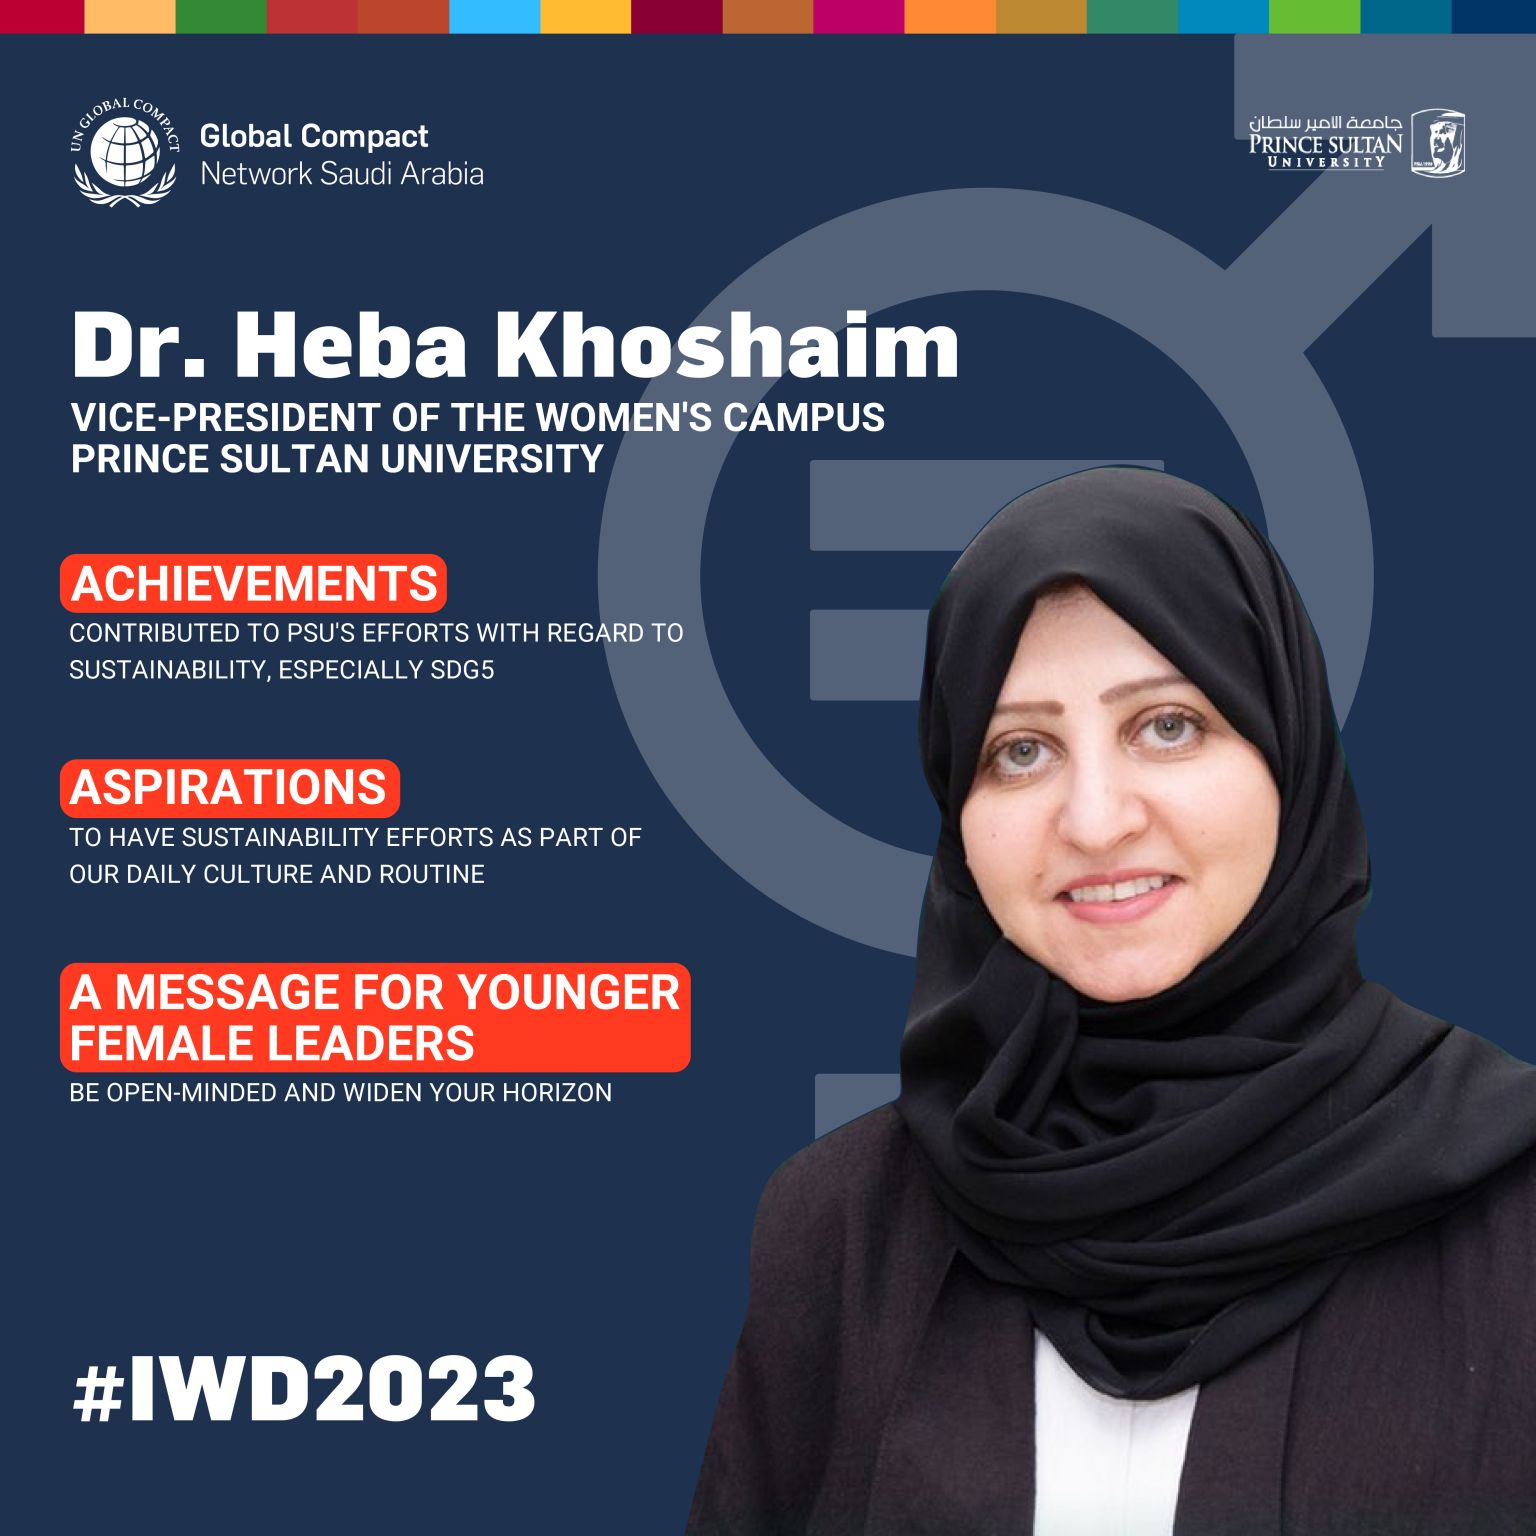 Global Compact Network Saudi Arabia recognizes Dr. Heba Bakr Khoshaim for International Women’s Day 2023